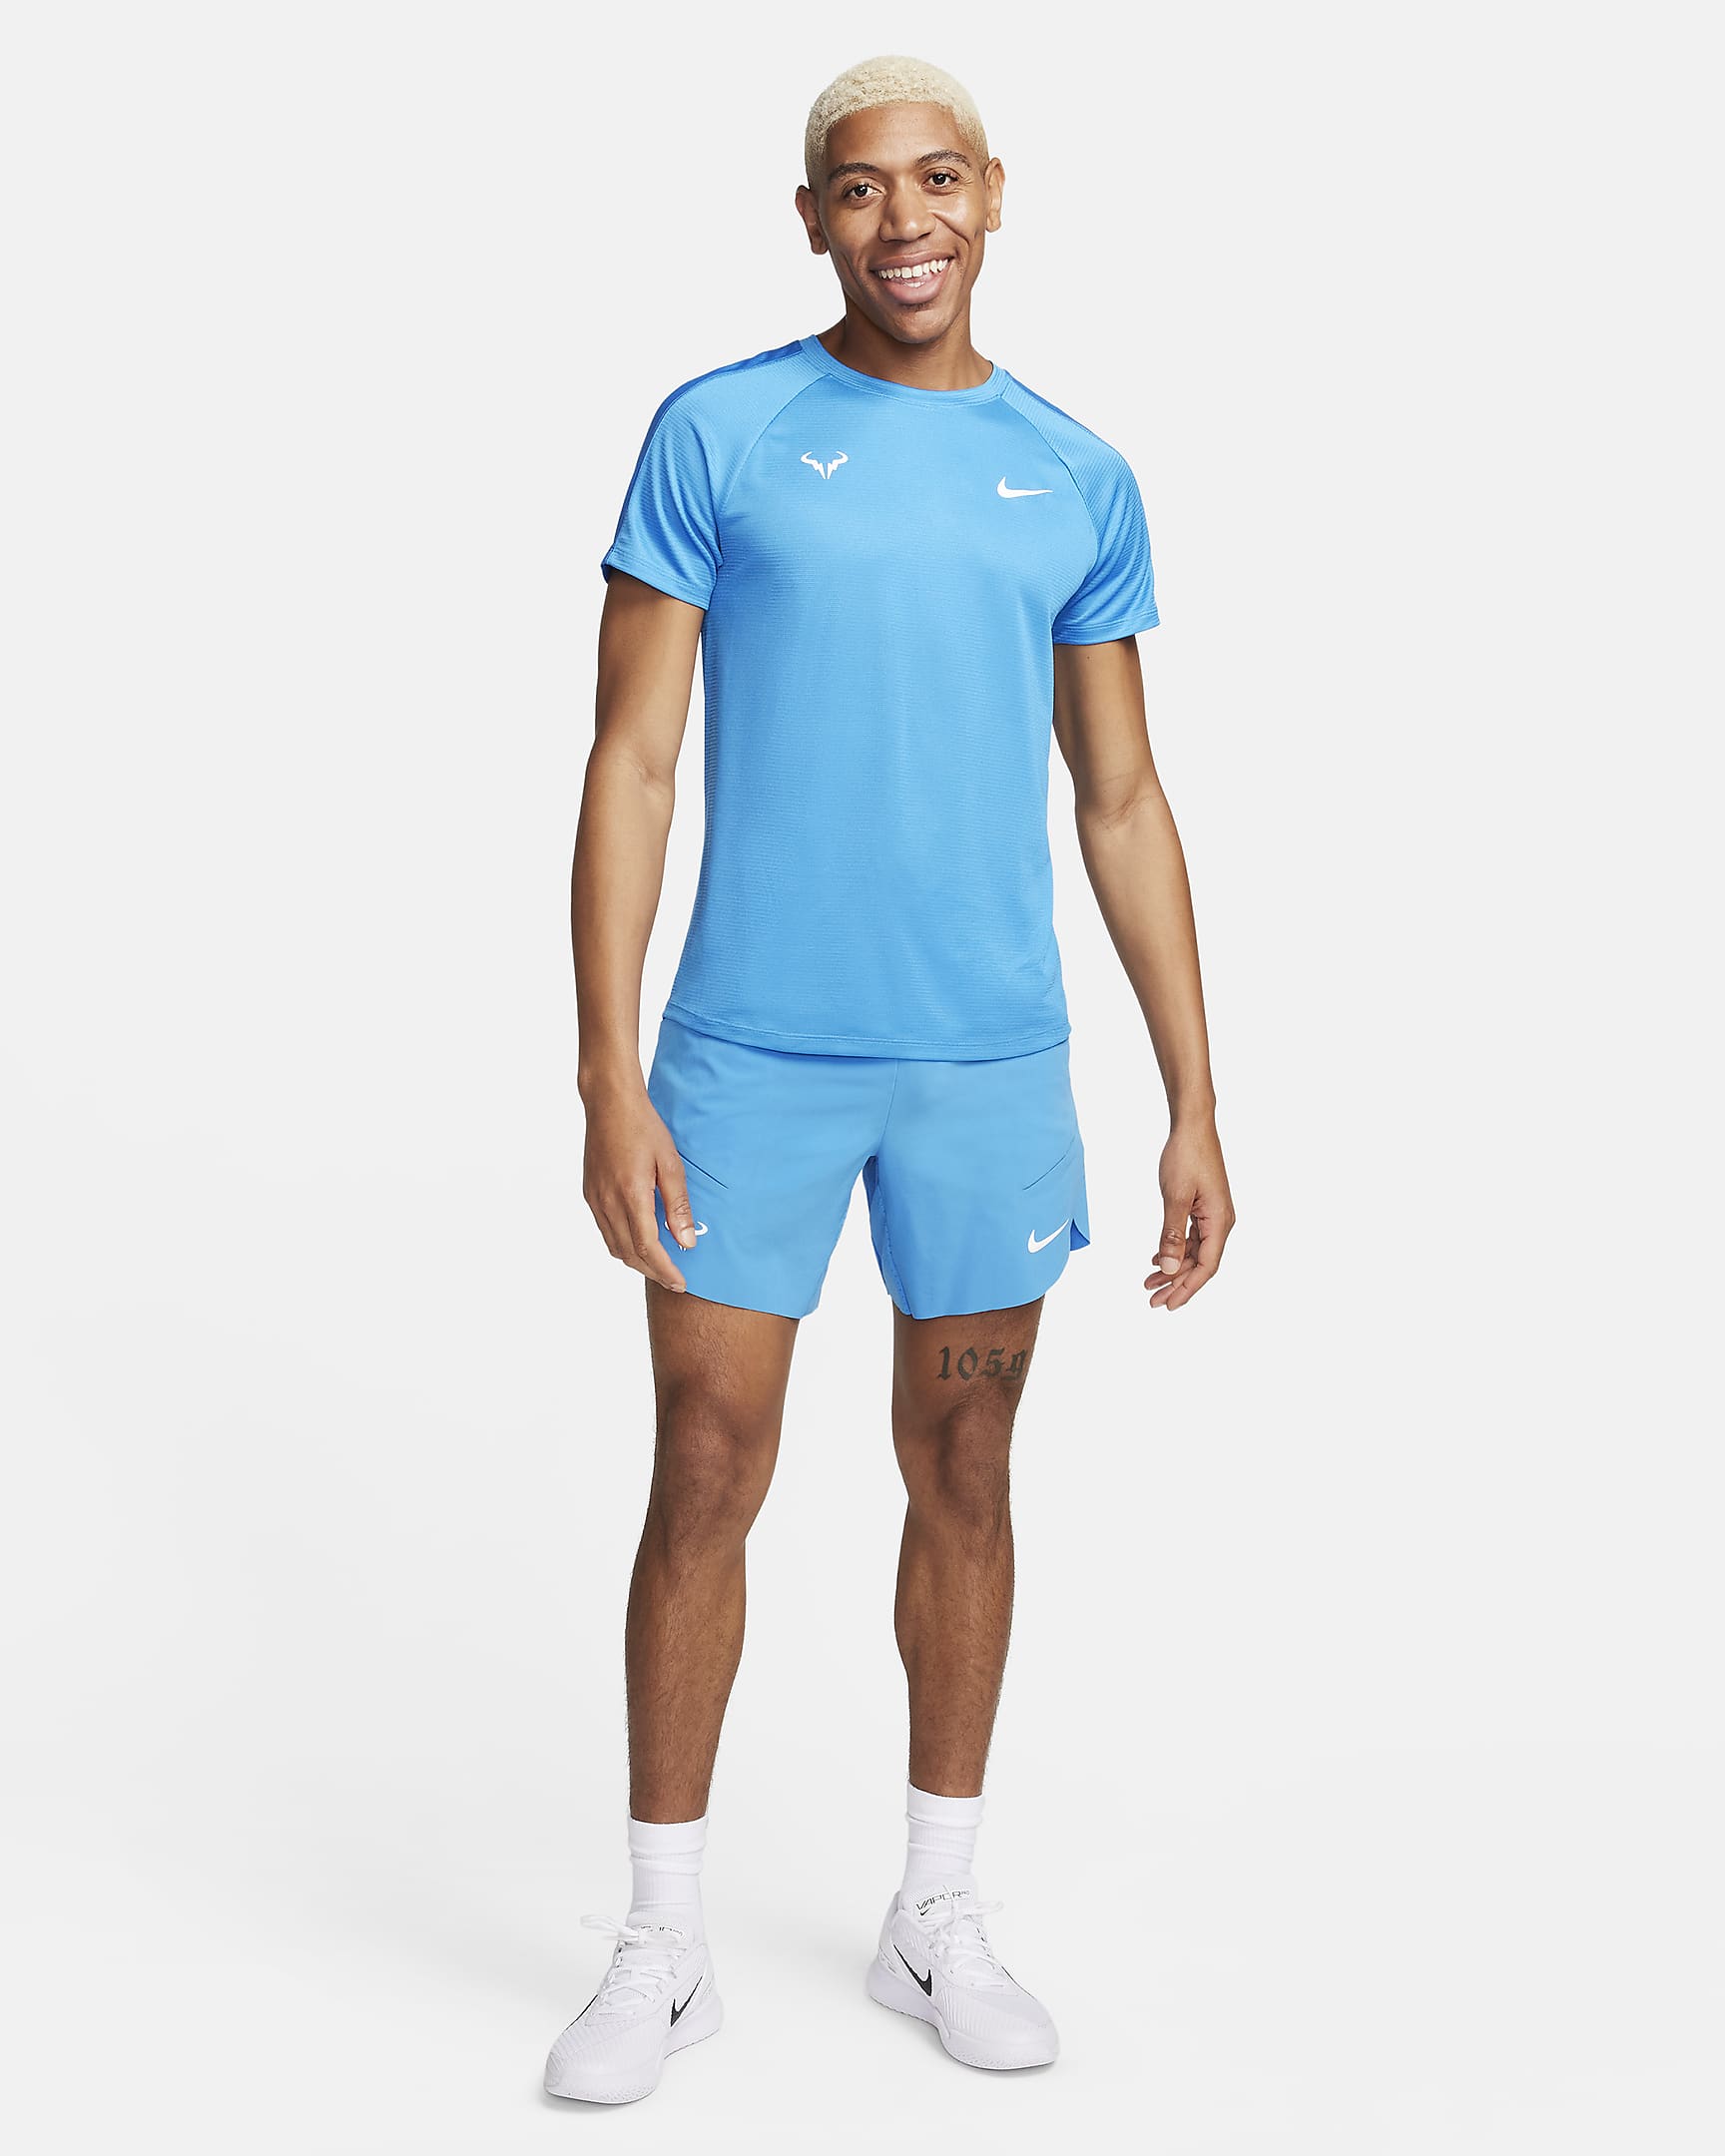 Rafa Challenger Men's Nike Dri-FIT Short-Sleeve Tennis Top. Nike BG